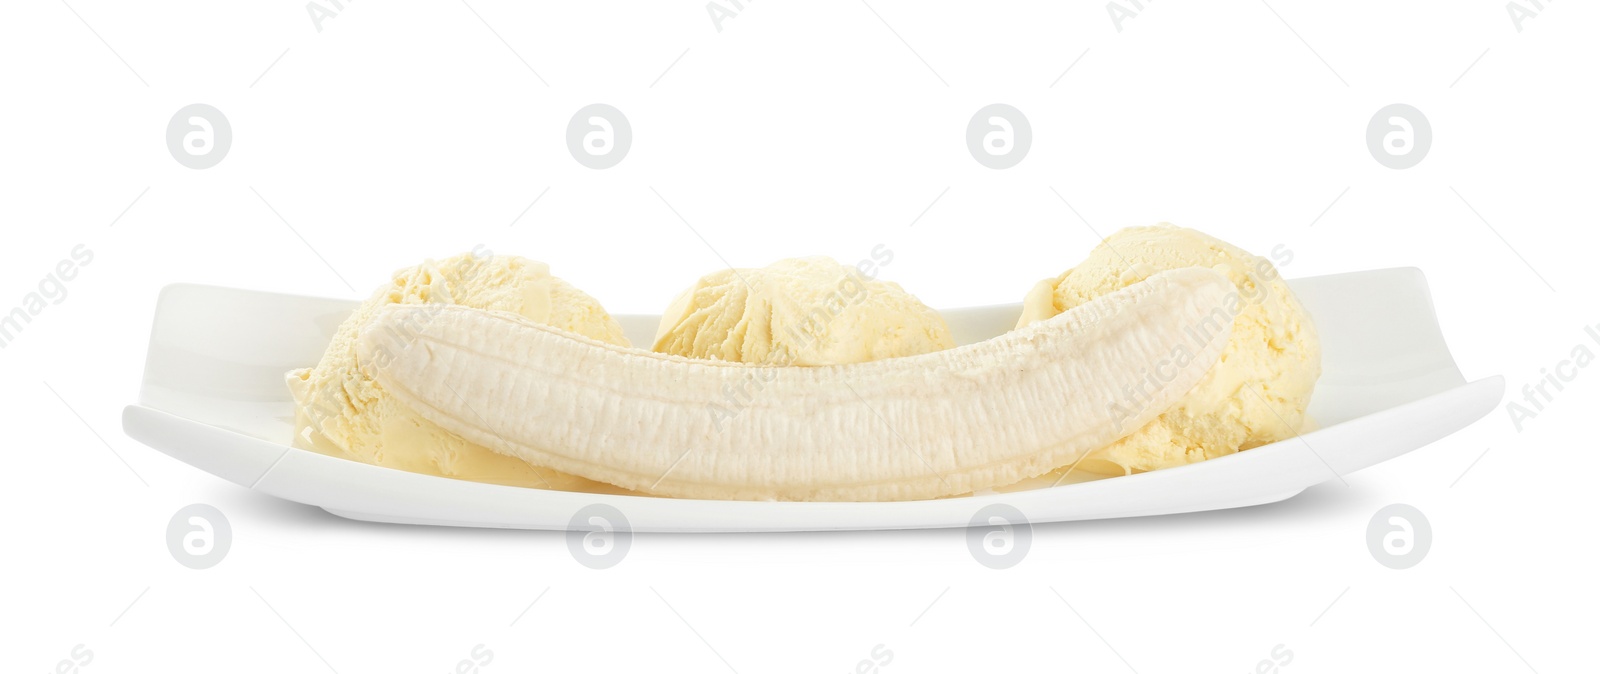 Photo of Delicious banana ice cream and fresh fruit isolated on white